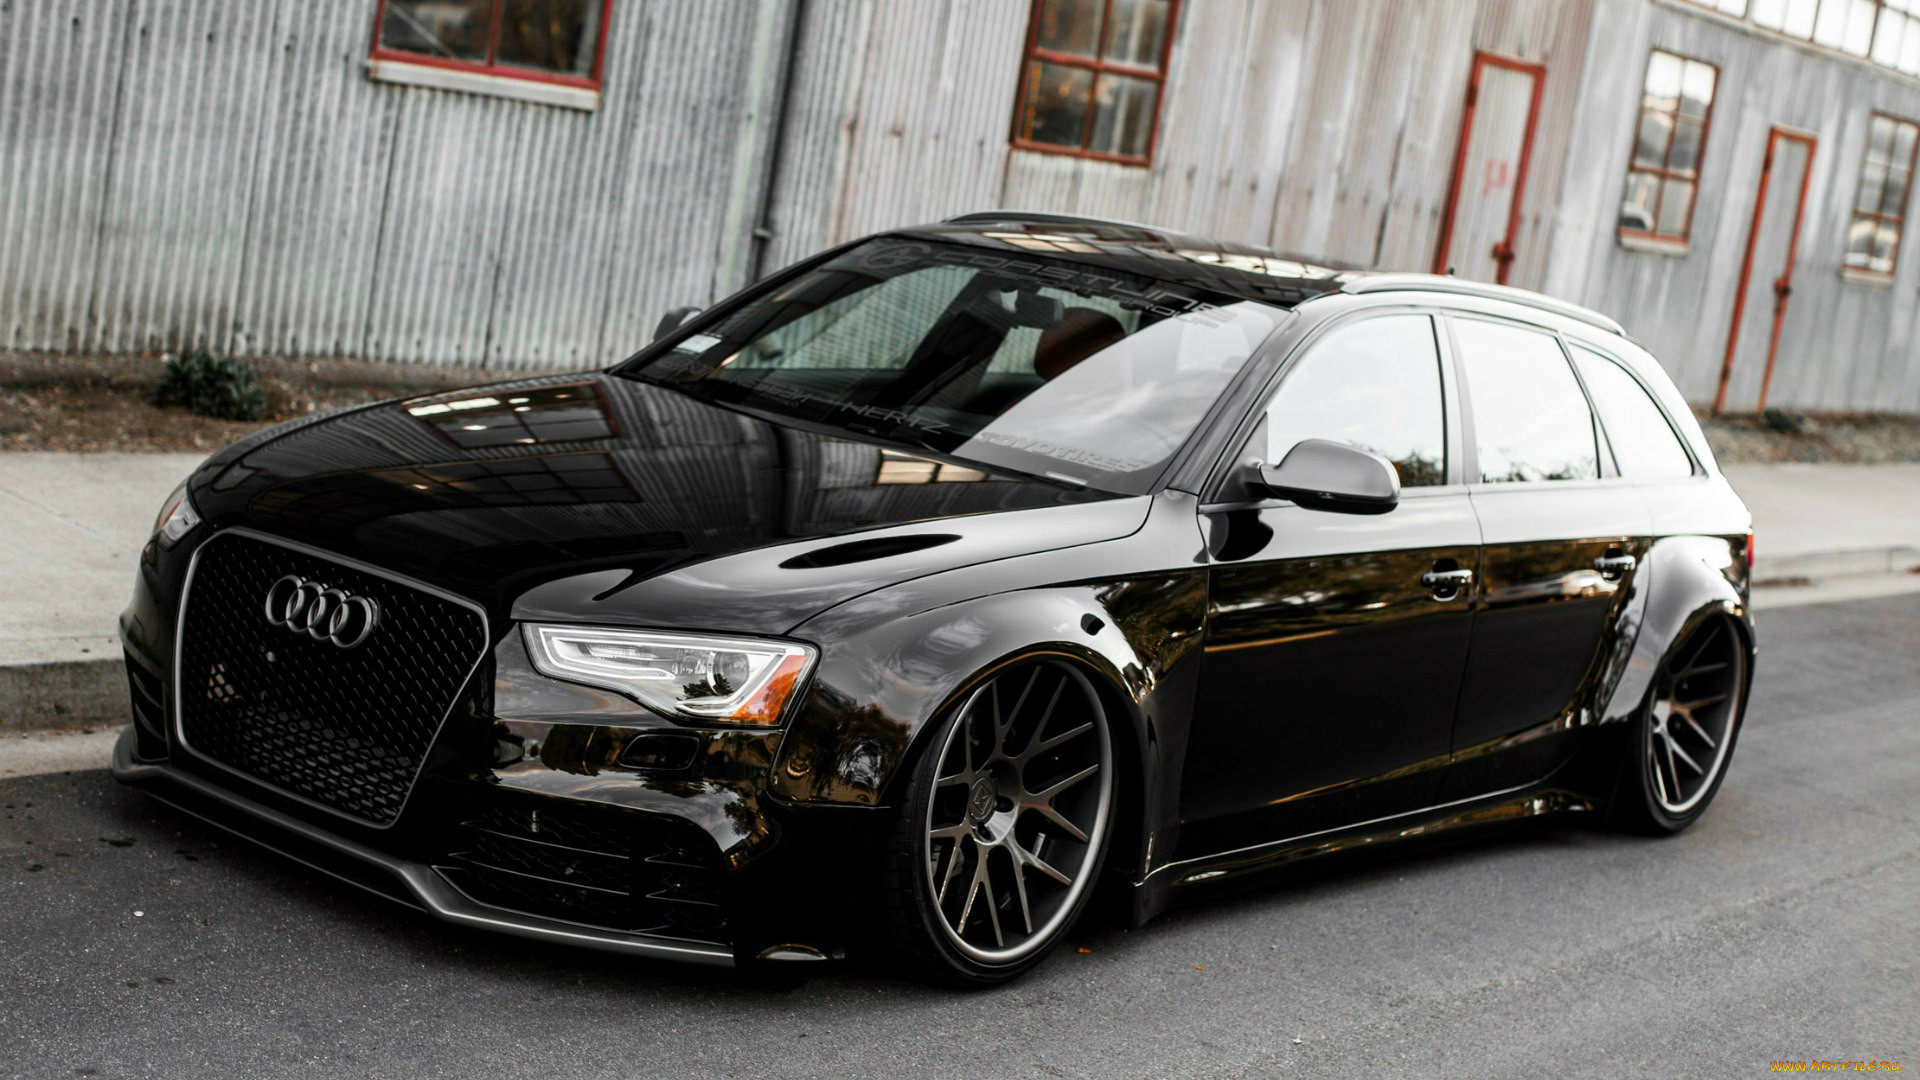 Audi a4 b8 фары. Ауди рс4 черная. Ауди rs4 2010. Ауди рс4 Авант 2010. Audi rs6 черная.